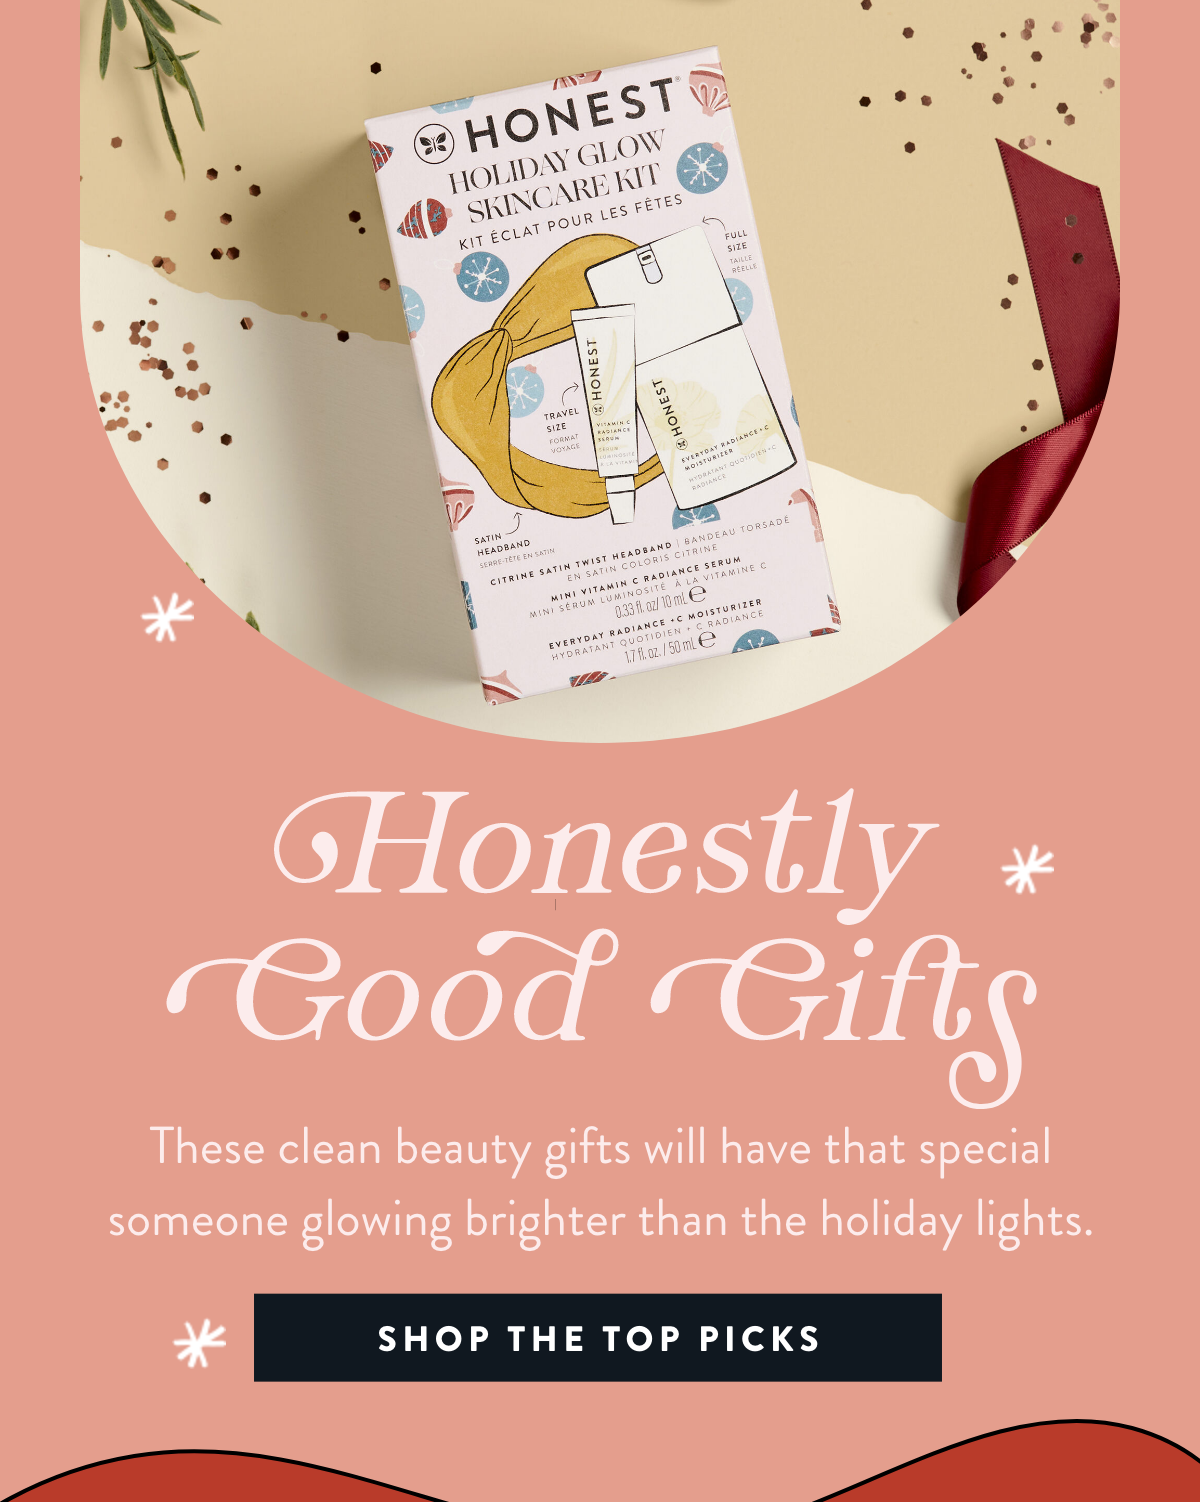 Honestly Good Gifts | Shop Top Picks